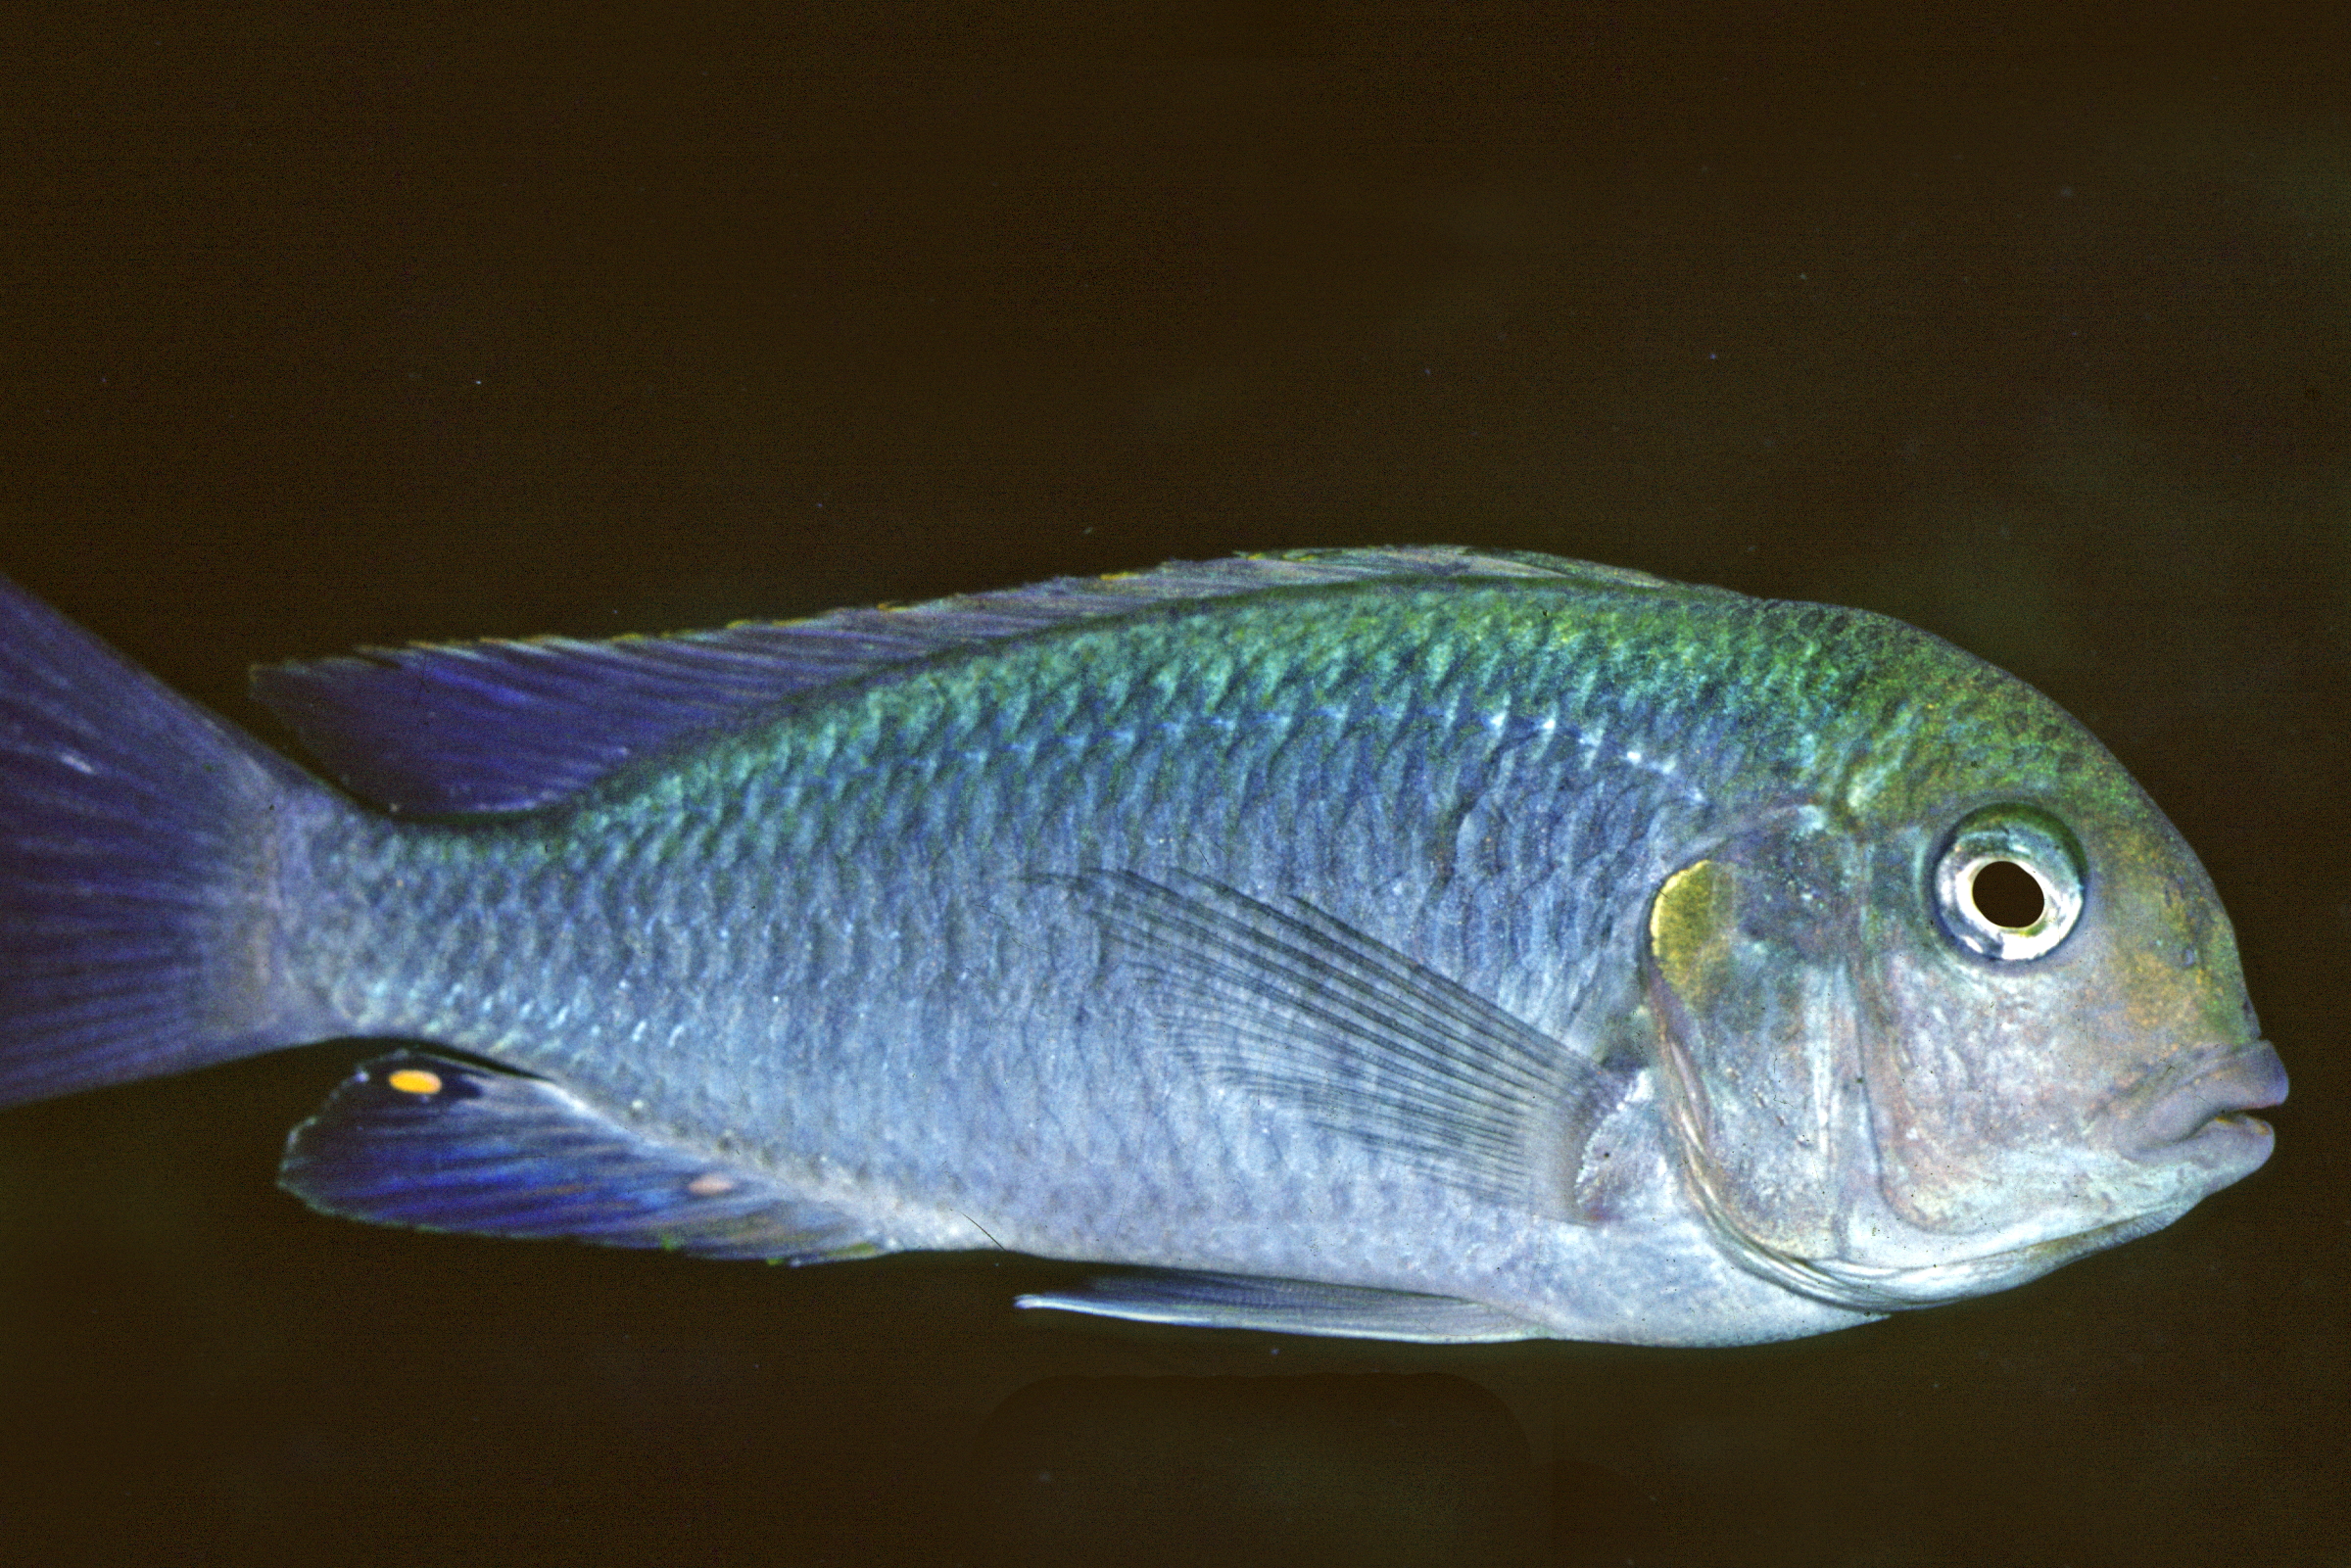 Pseudosimochromis